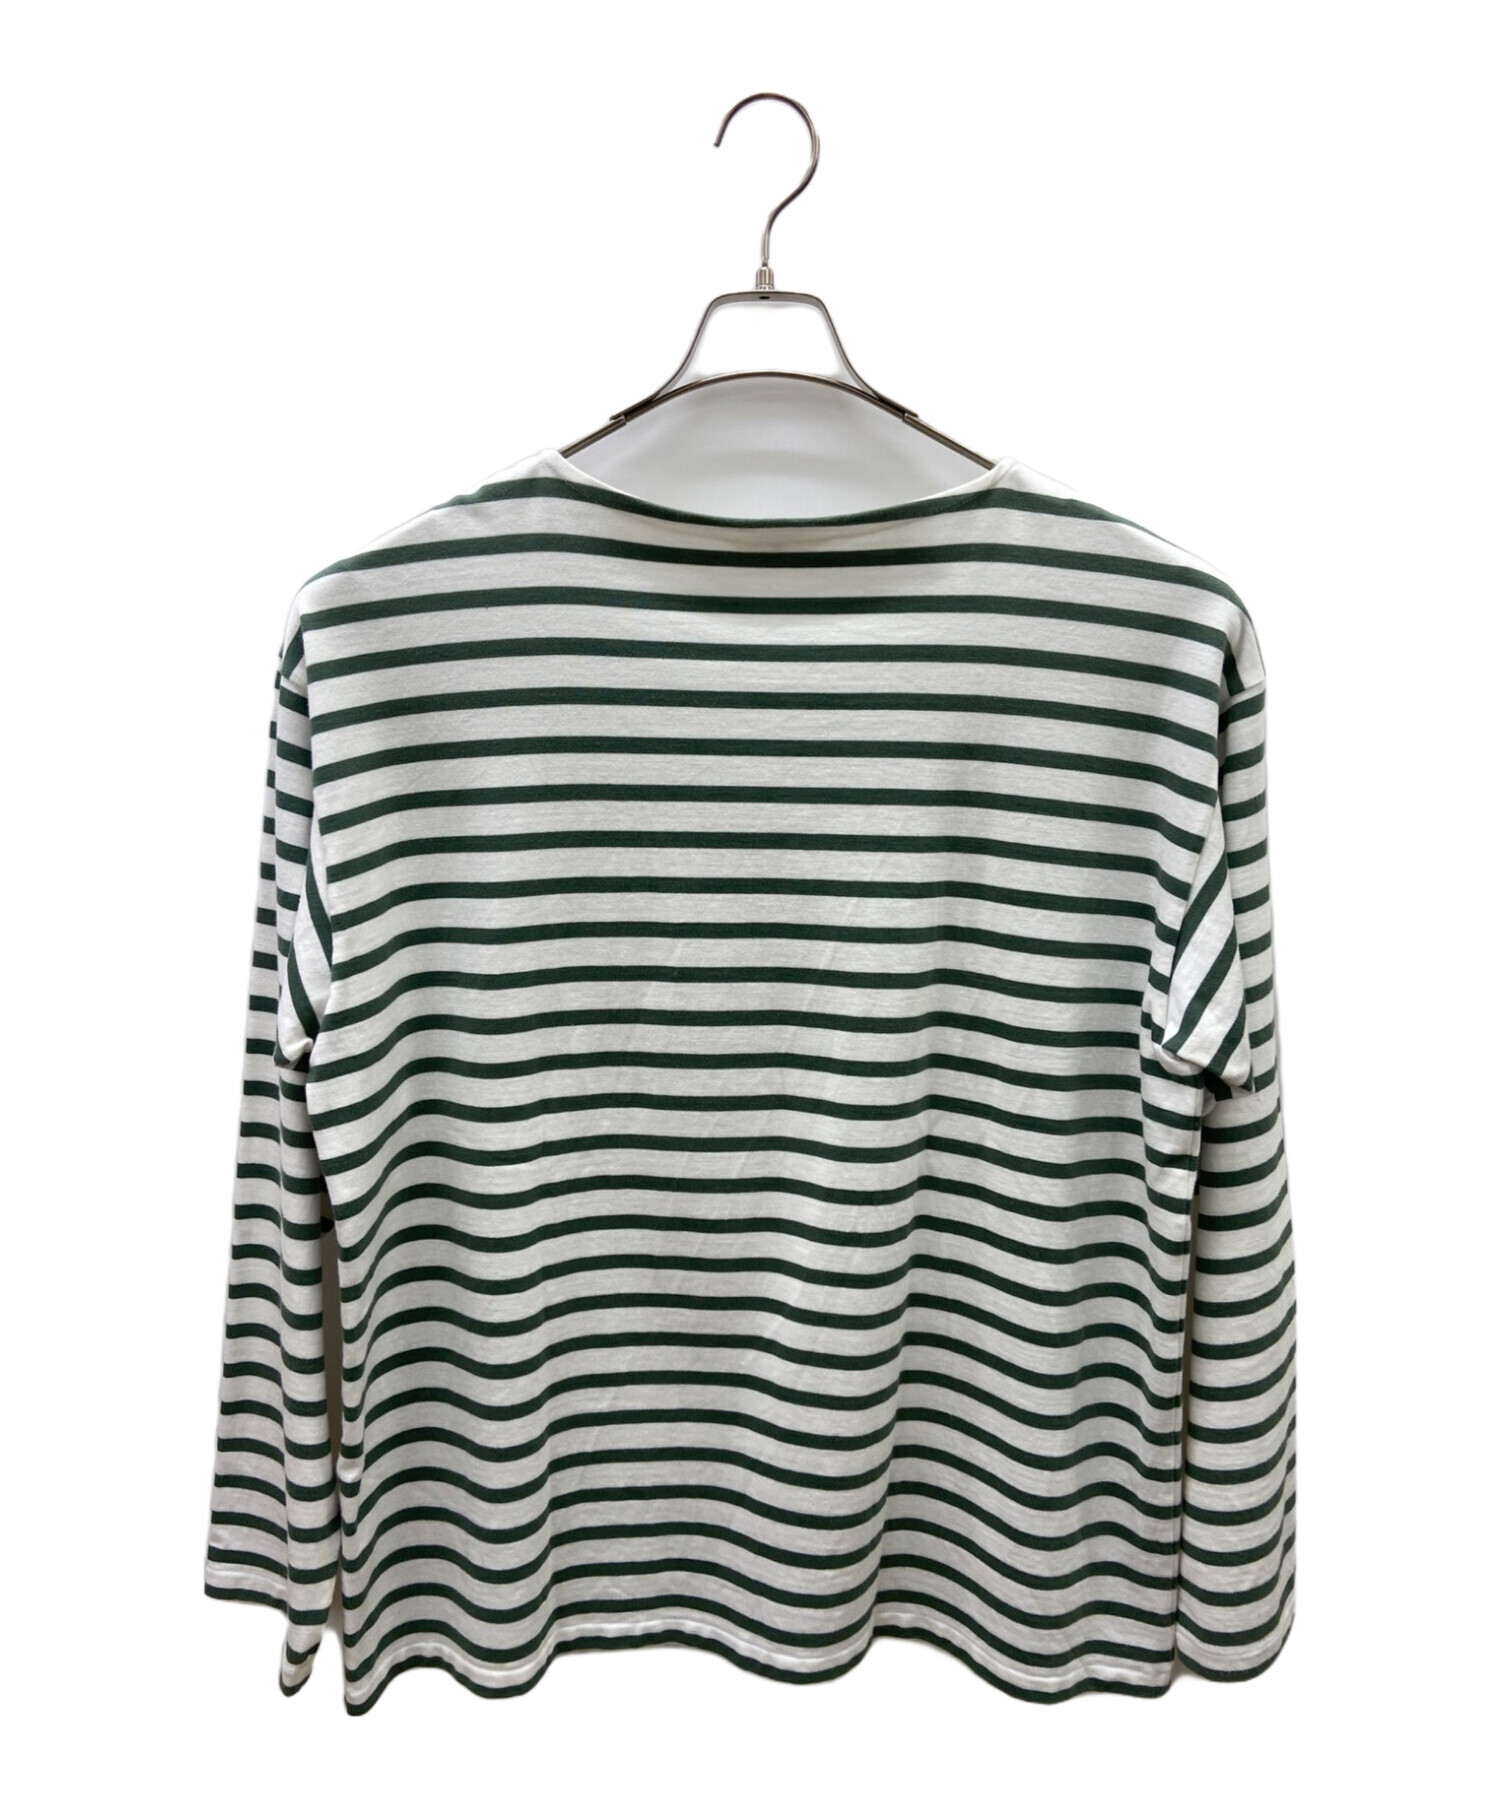 AURALEE (オーラリー) IENA (イエナ) バスクシャツ ホワイト×グリーン サイズ:4